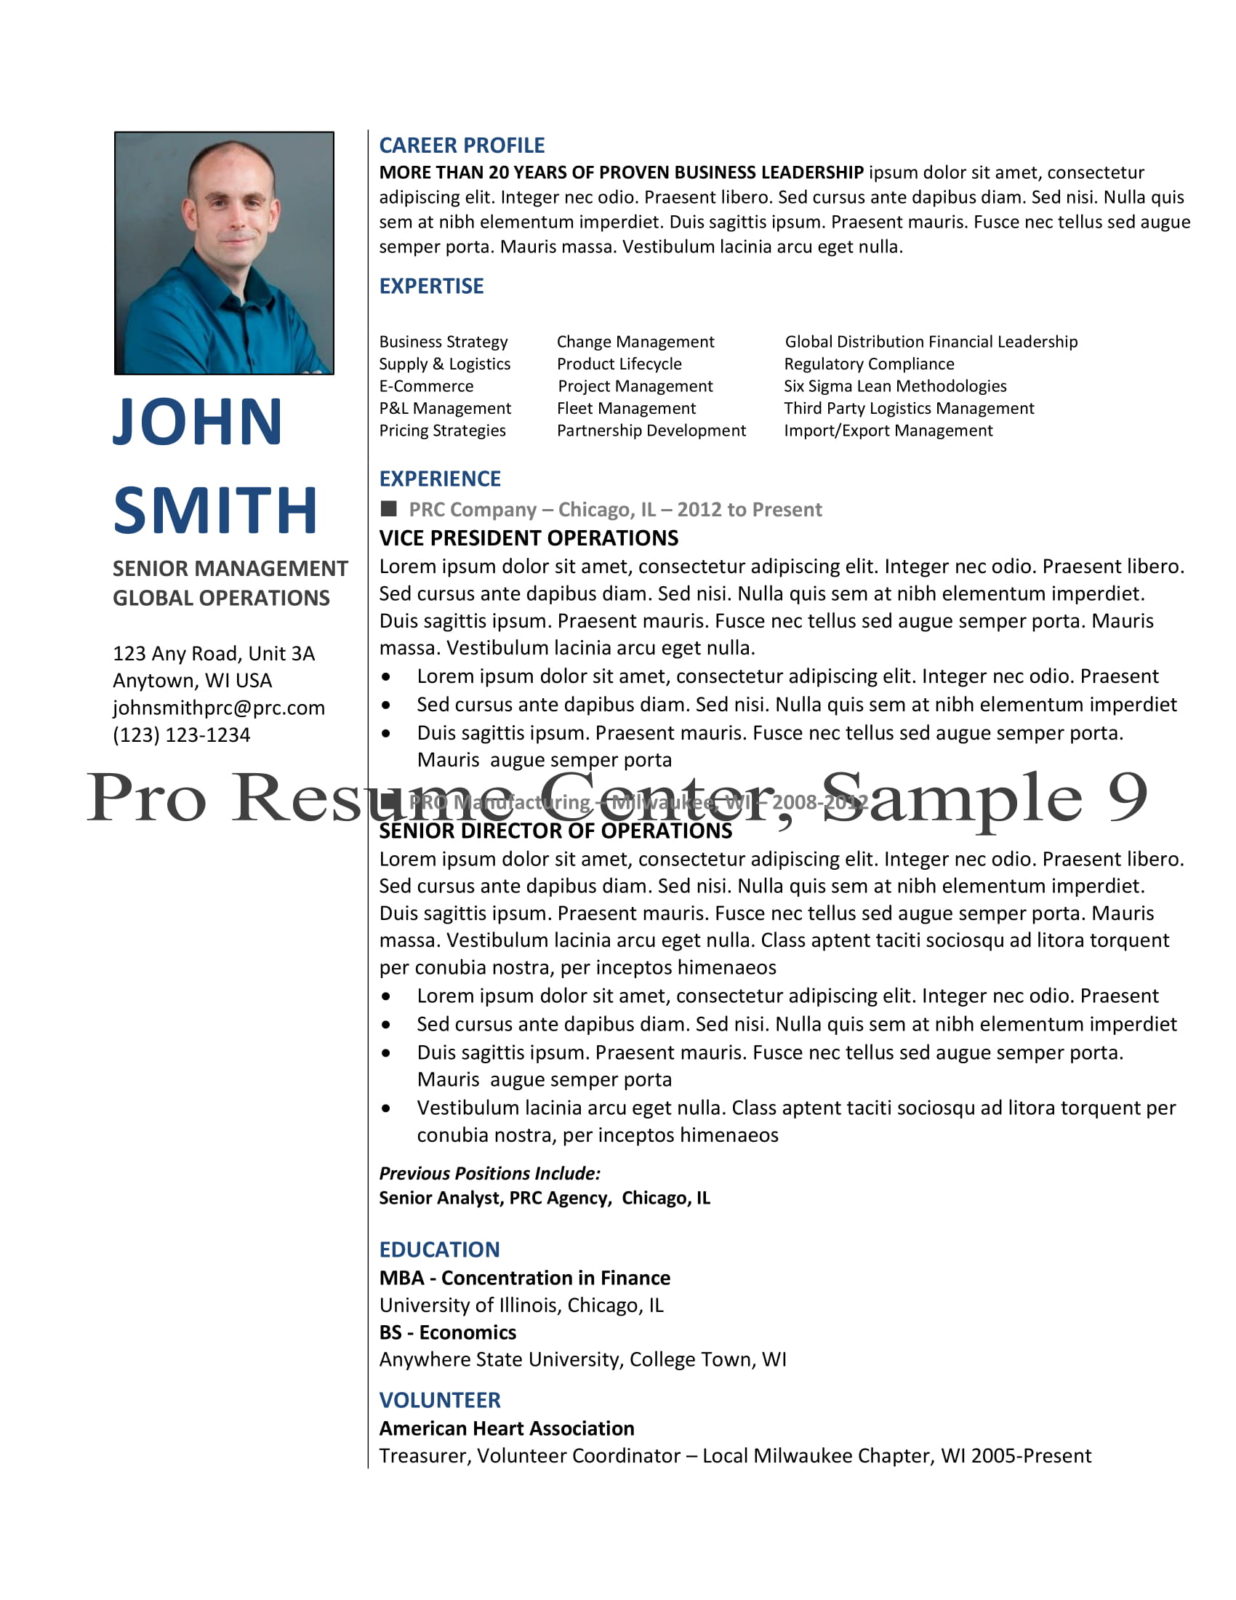 Resume Format Sample 9